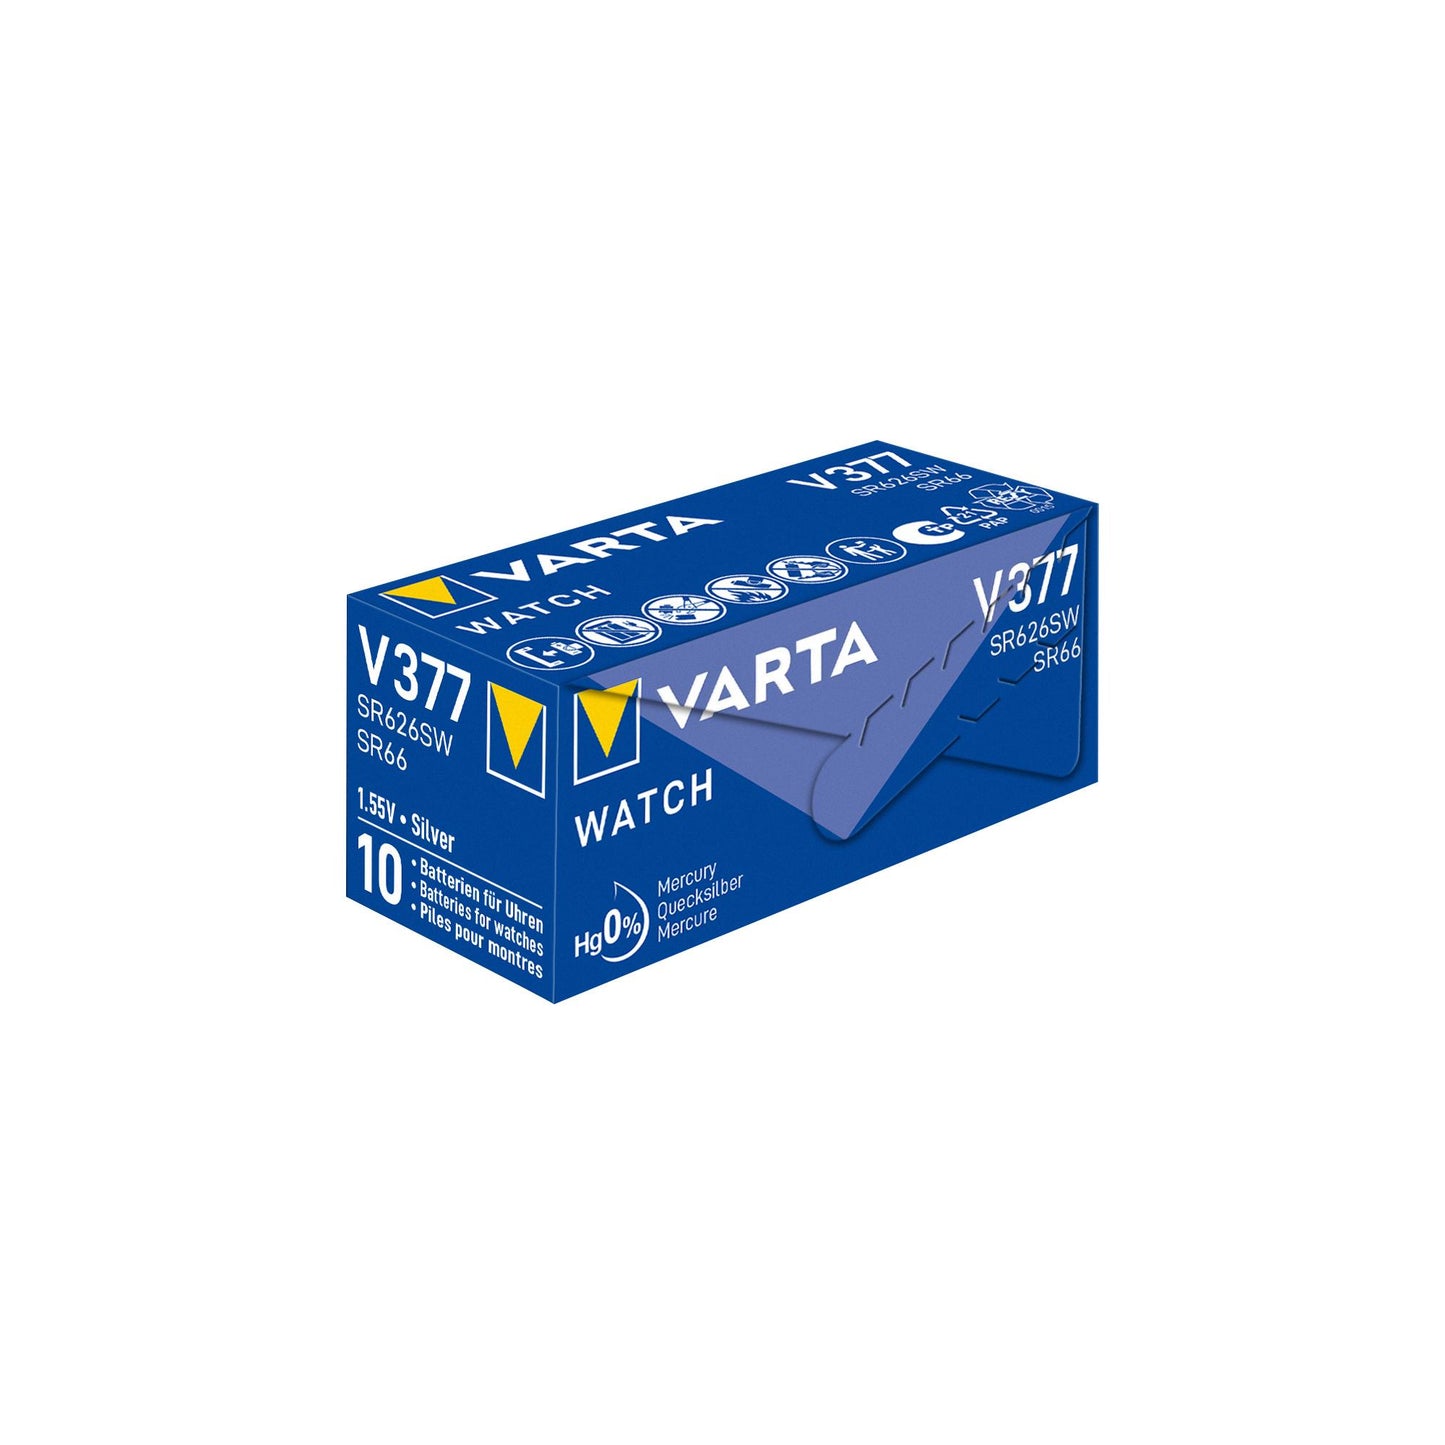 VARTA Batterie Silver Oxide Knopfzelle 377, SR66, 1.55V Watch, Retail (10-Pack)